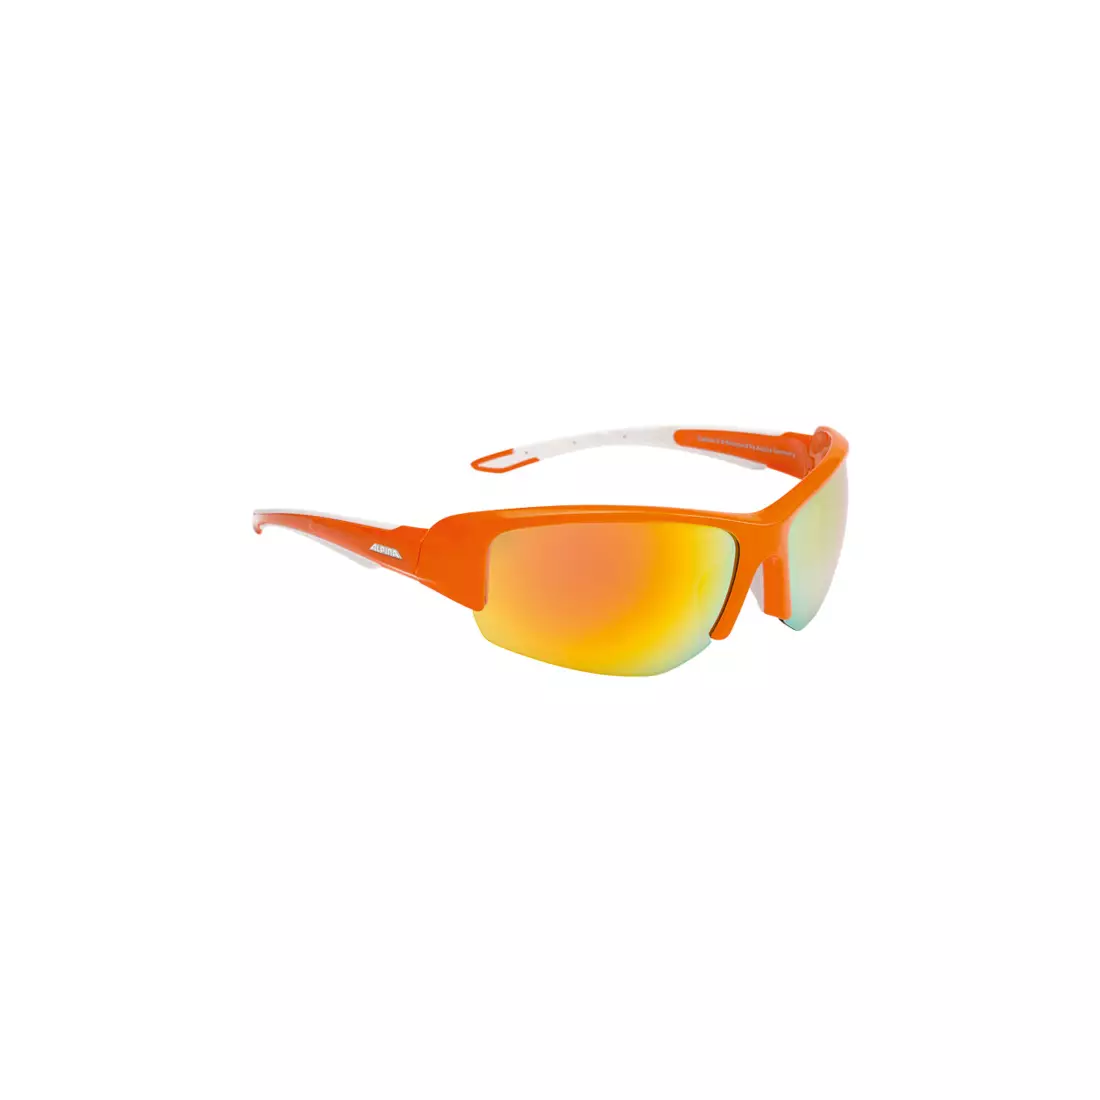 ALPINA - CALLUM 2.0 sports glasses - orange-white / orange ceramic mirror glass.